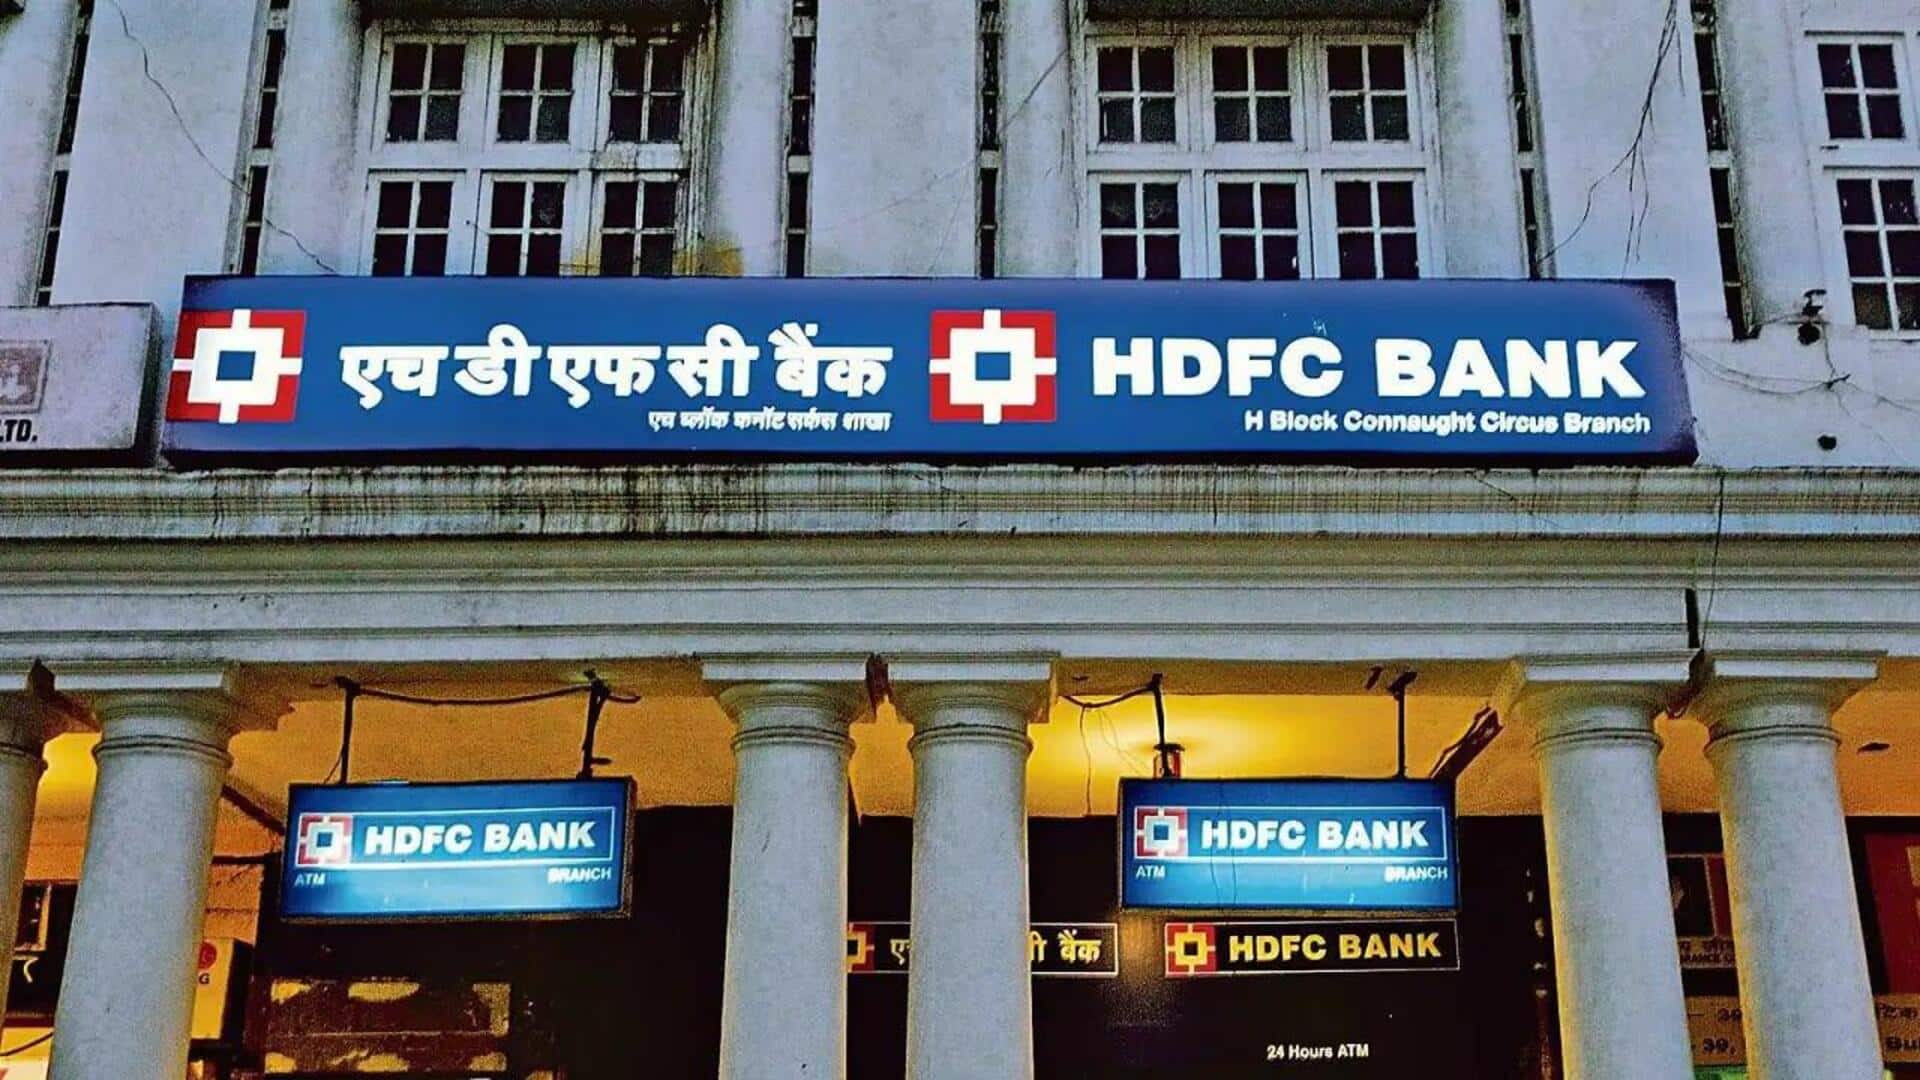 HDFC Bank and LIC led market cap boost last week